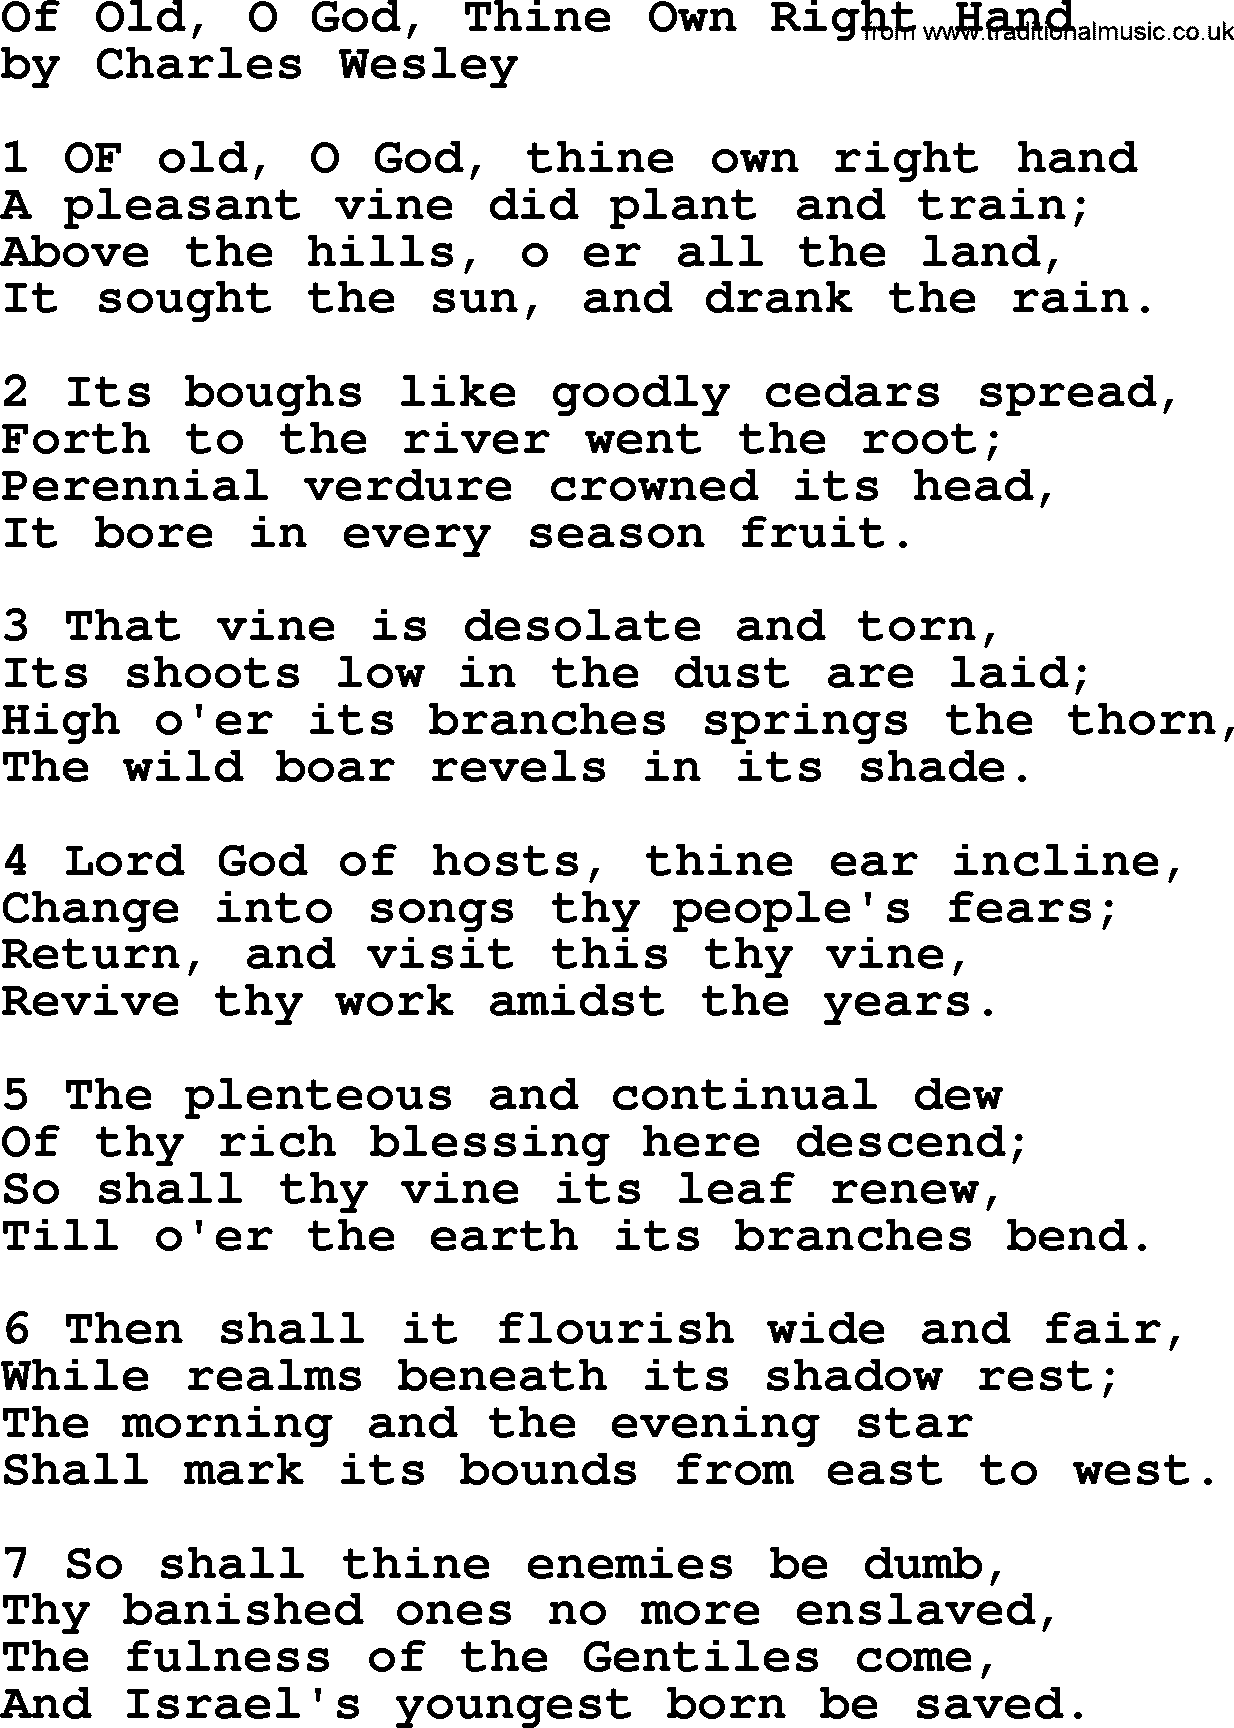 Charles Wesley hymn: Of Old, O God, Thine Own Right Hand, lyrics